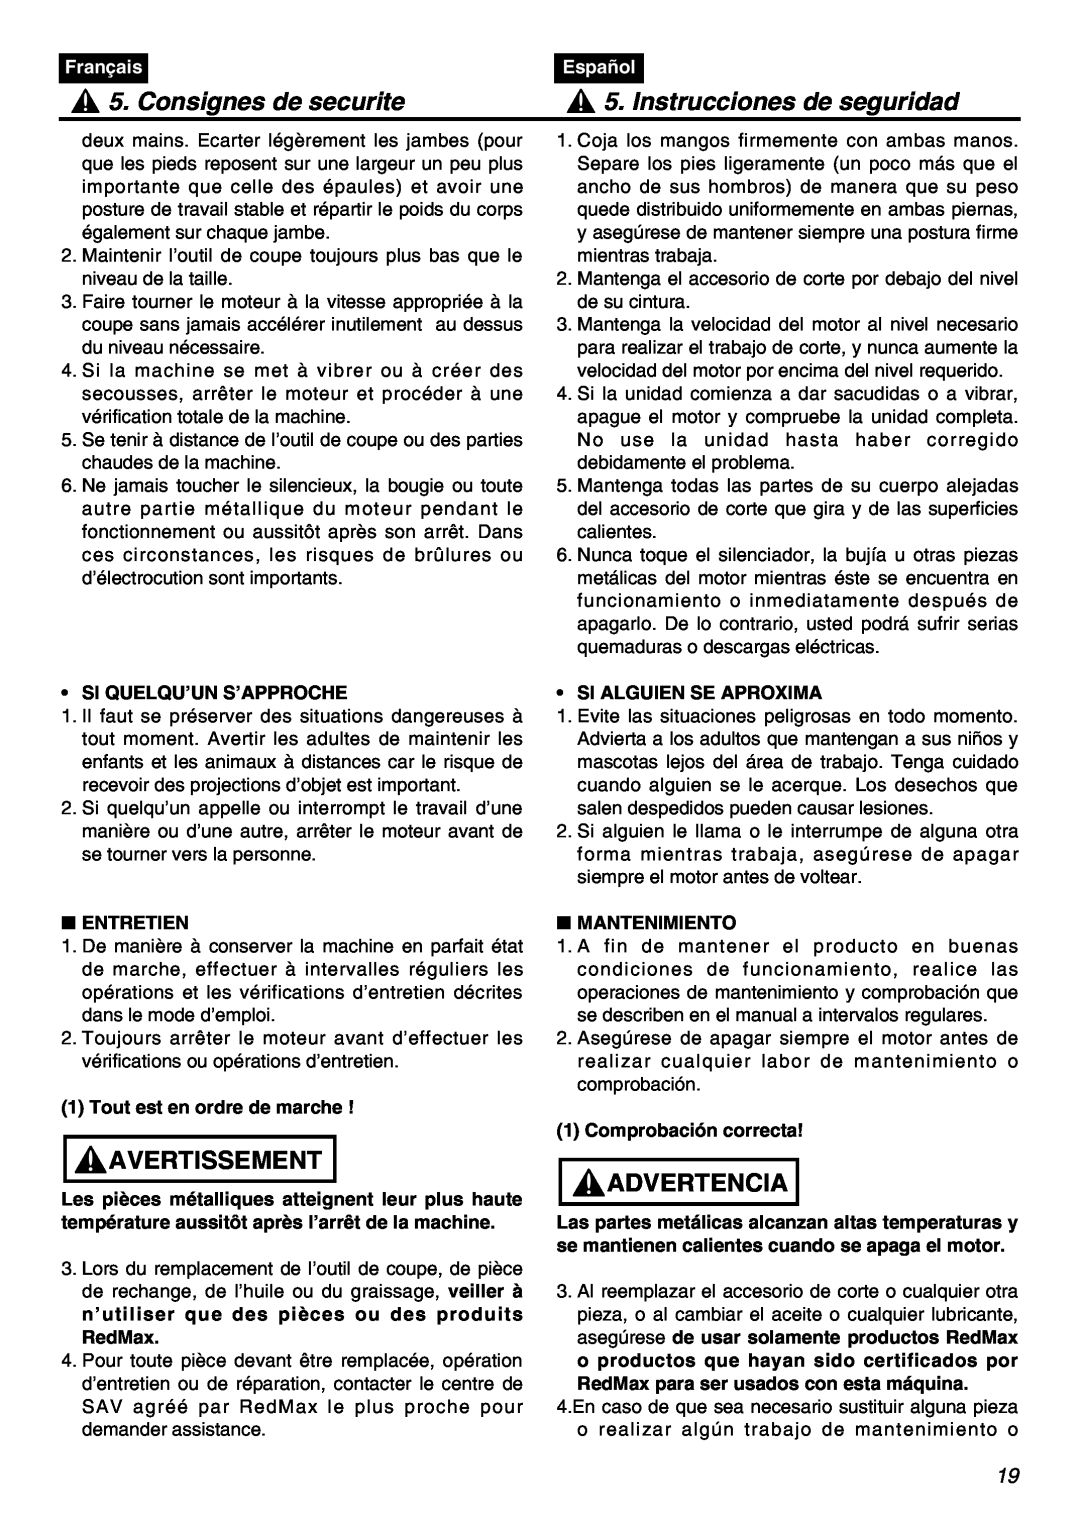 RedMax HEZ2602S, HEZ3001S Consignes de securite, Instrucciones de seguridad, Avertissement, Advertencia, Français, Español 